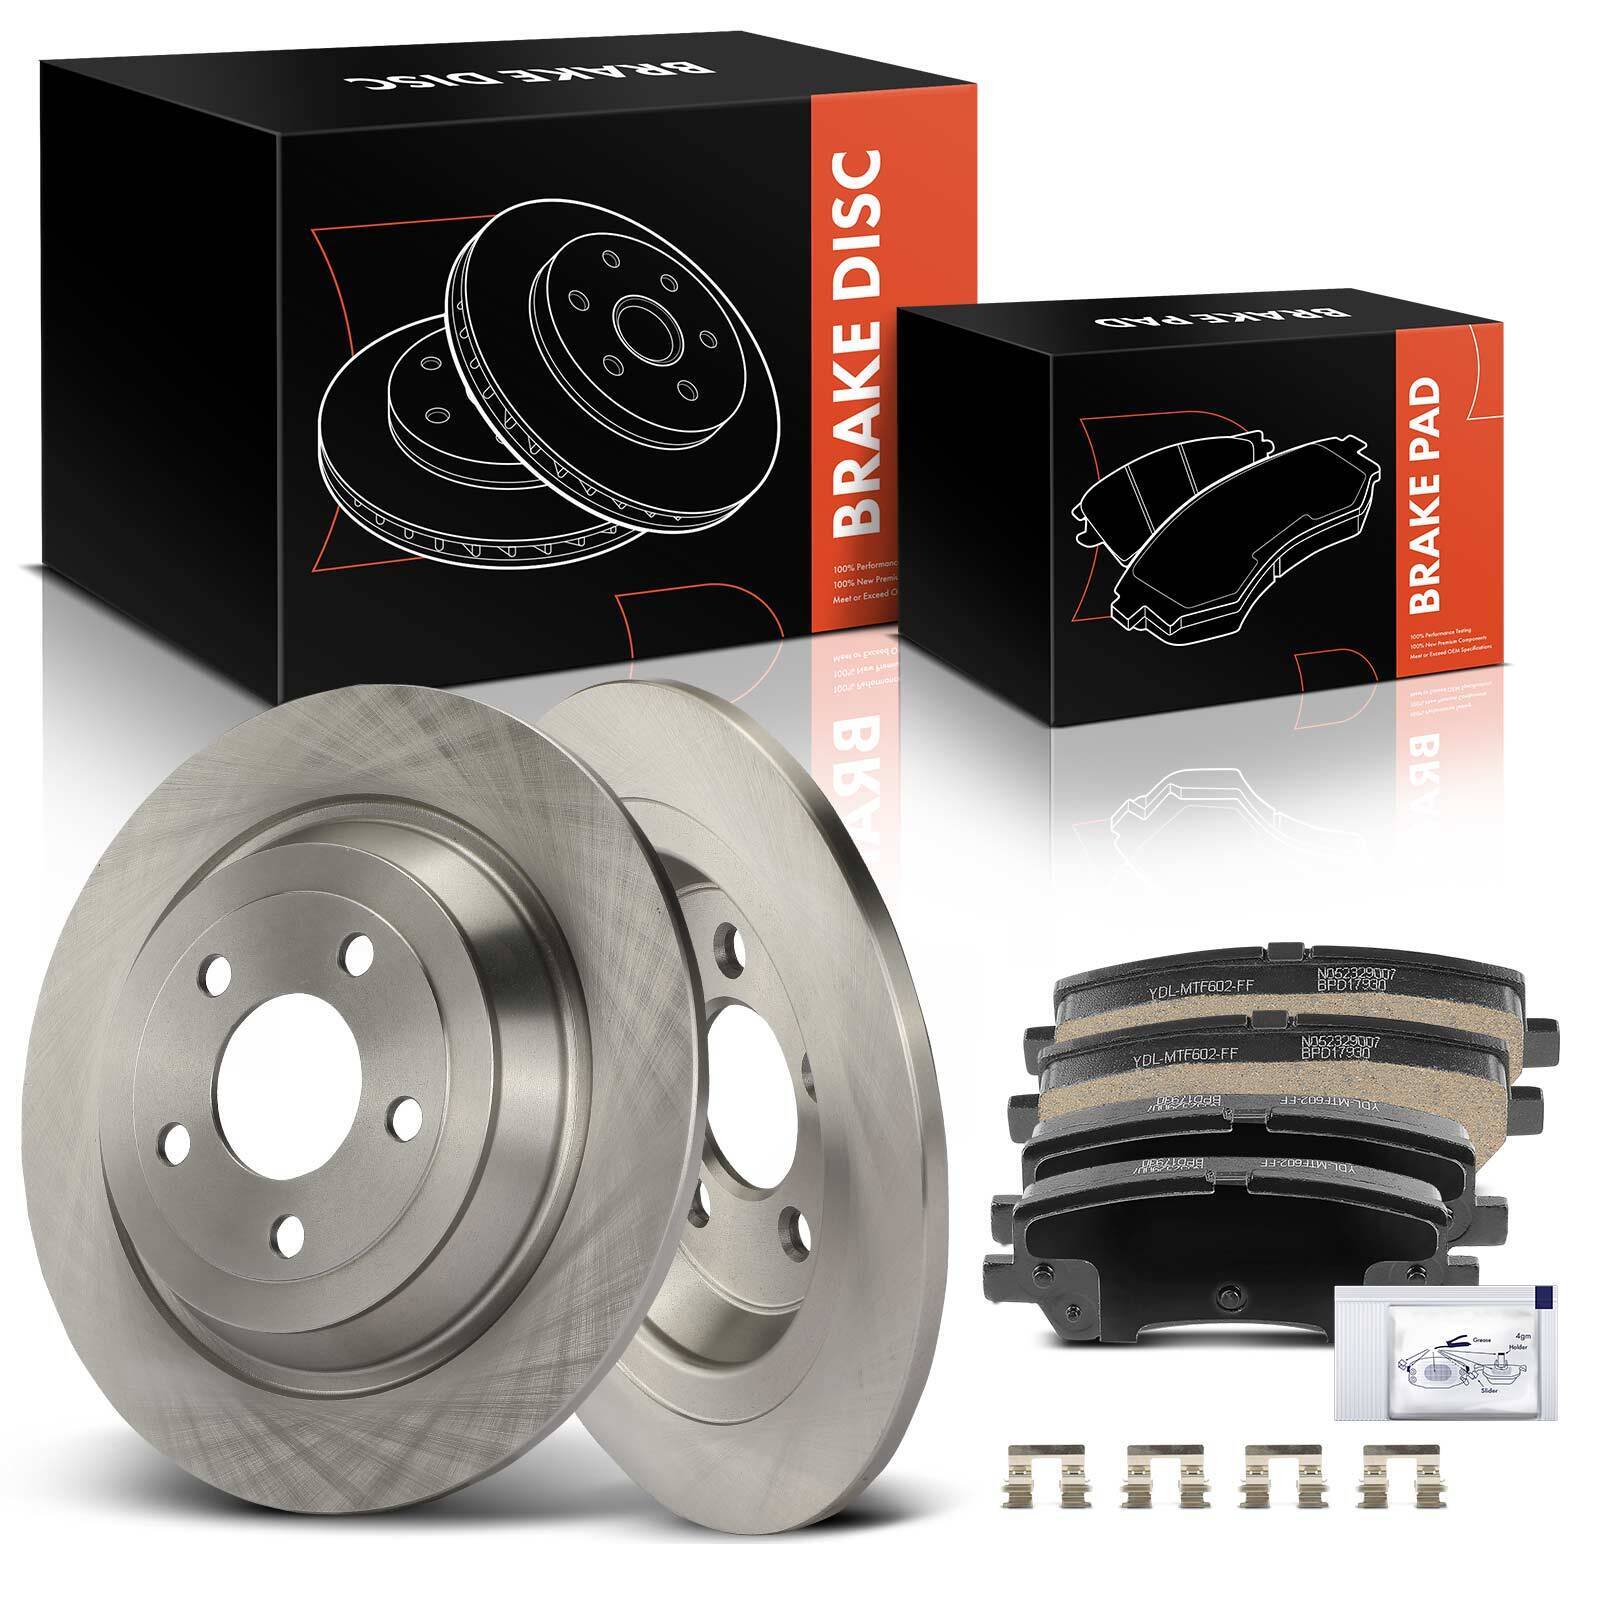 6x Rear Disc Rotors & Ceramic Brake Pads for Ford Mustang 2015-2020 Base Brakes